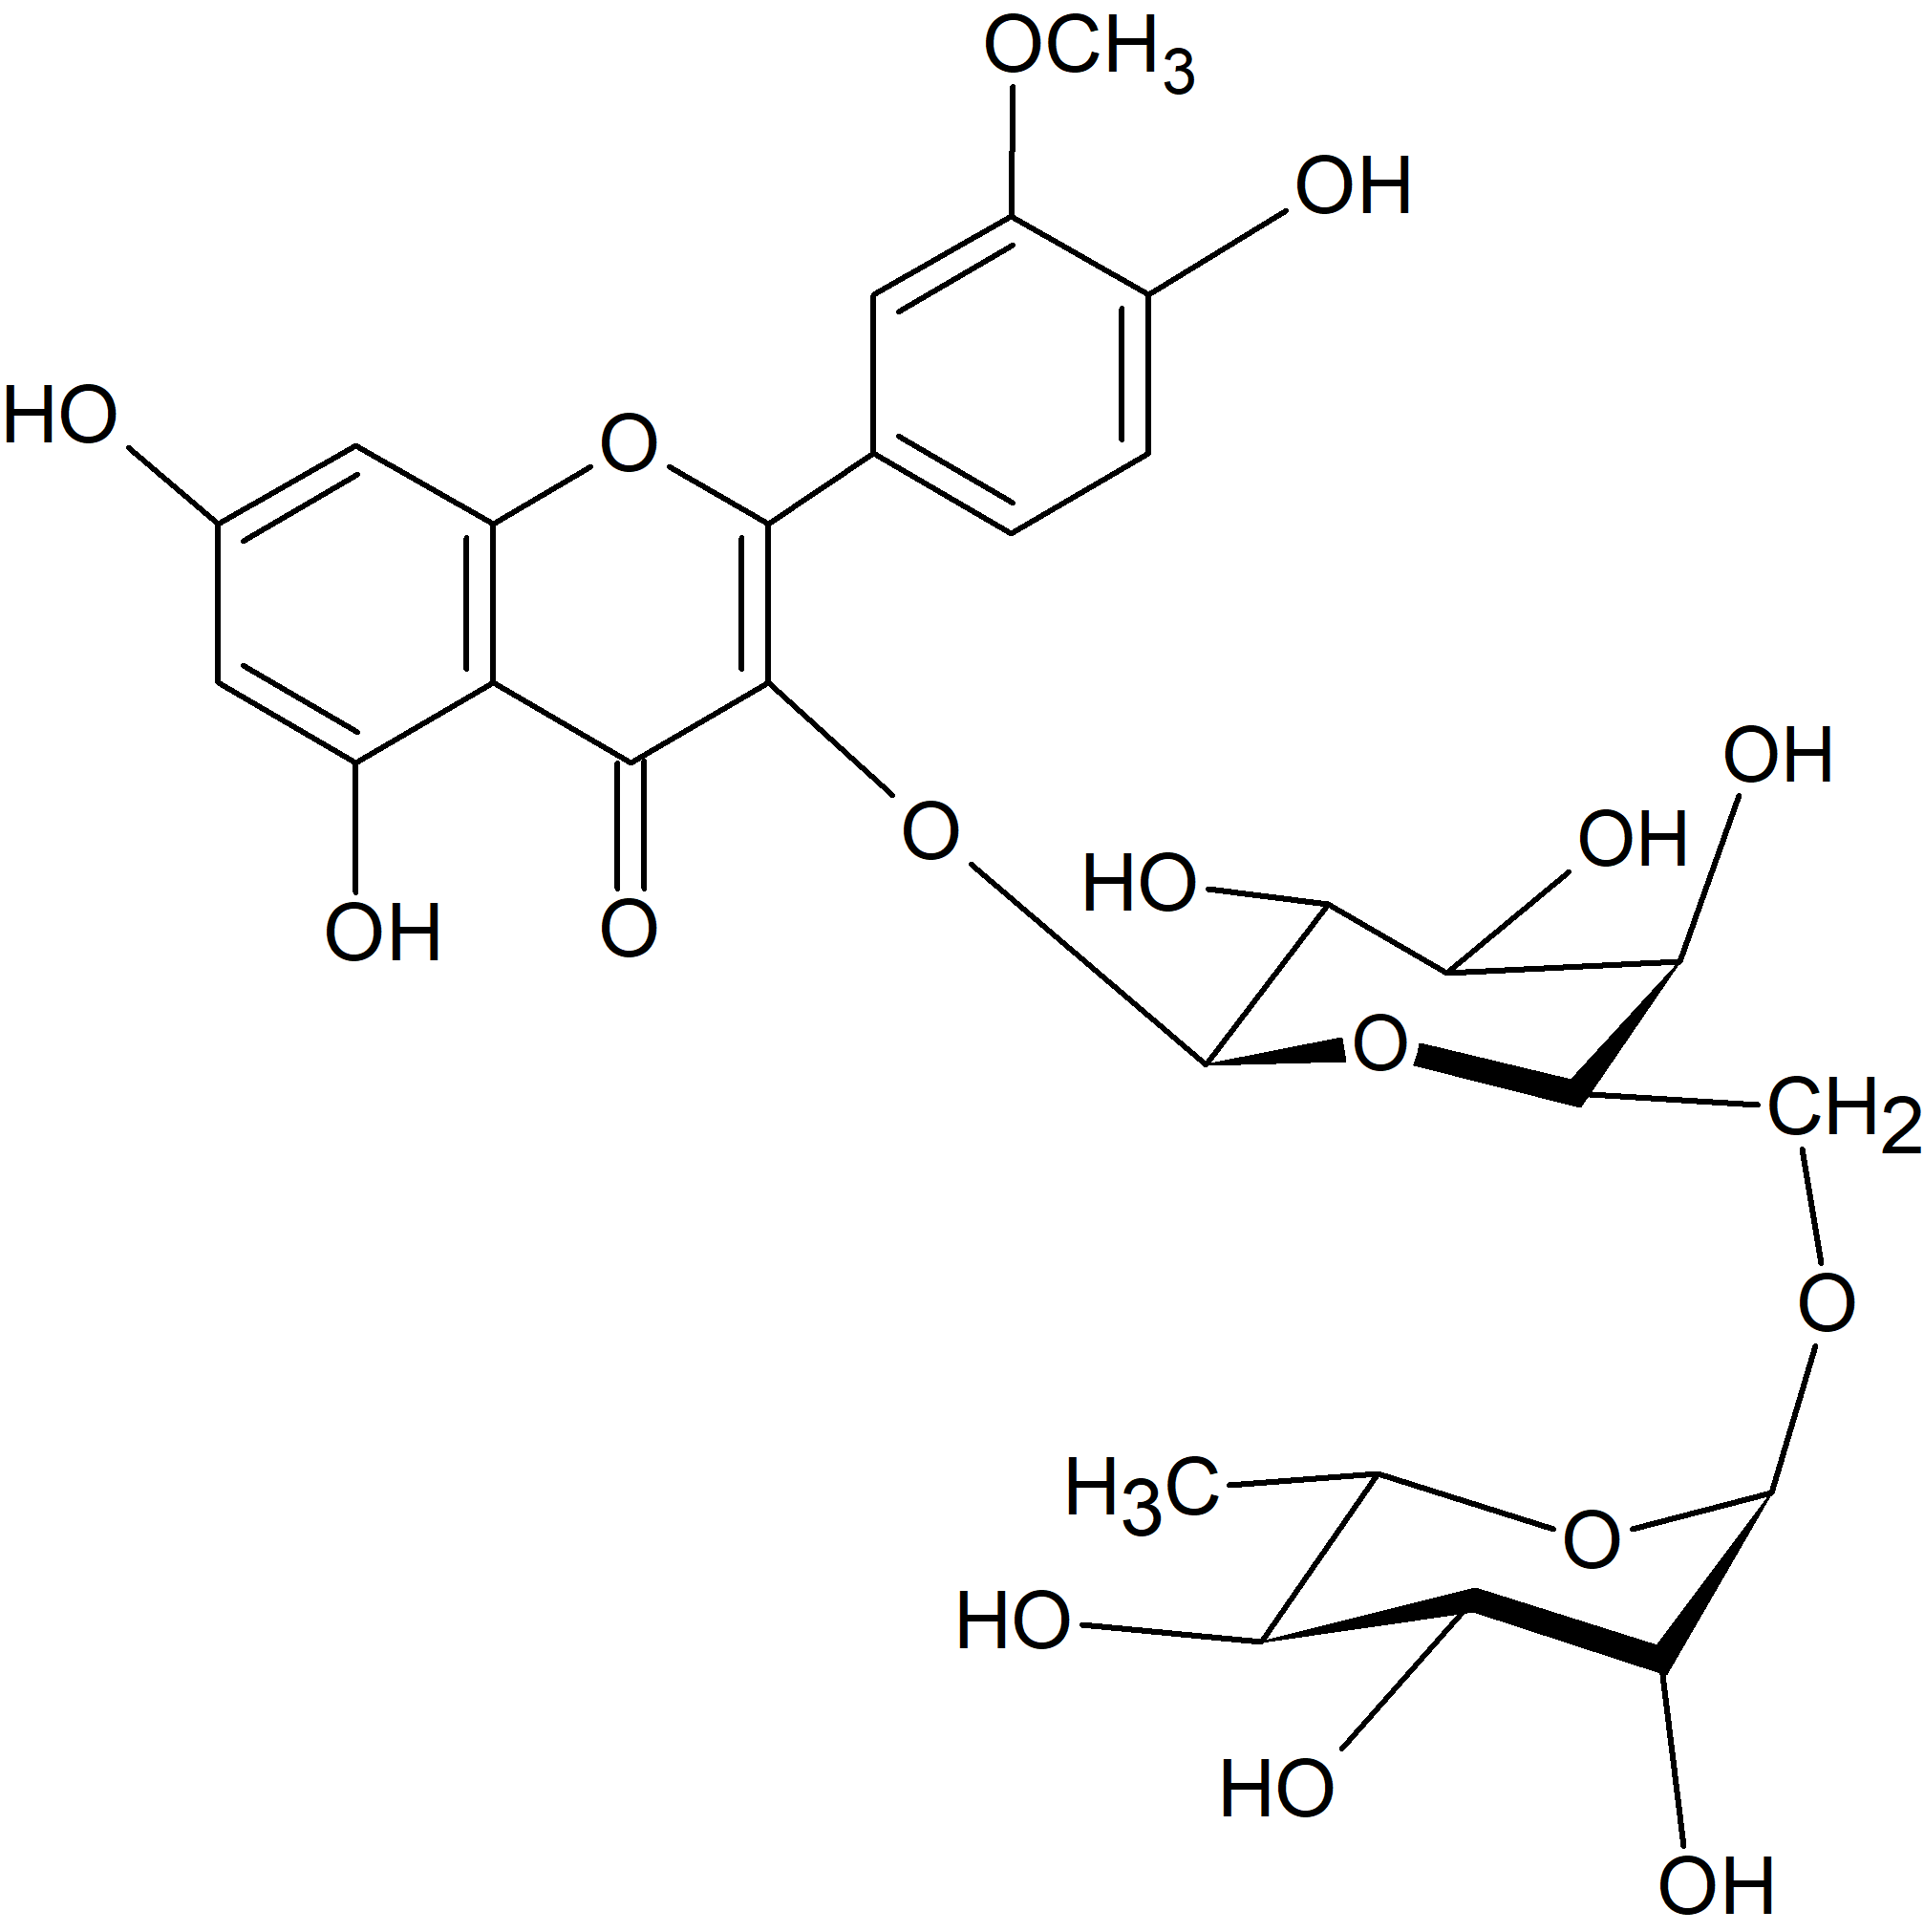 Isorhamnetin-3-O-robinobioside